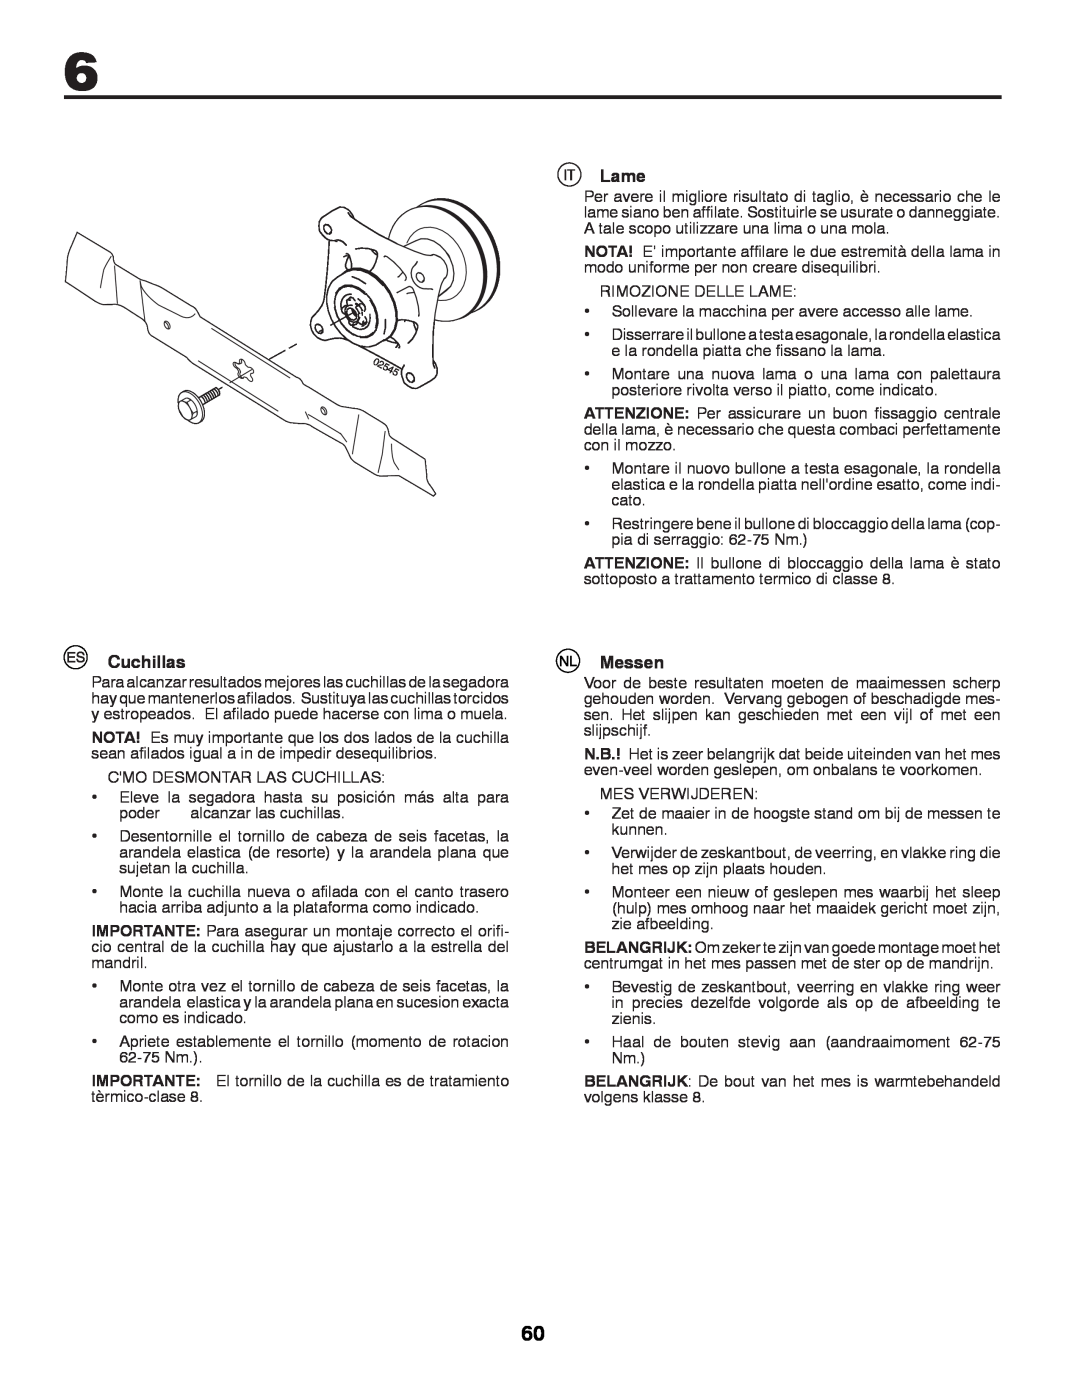 Husqvarna GTH260TWIN instruction manual Cuchillas, Lame, Messen 